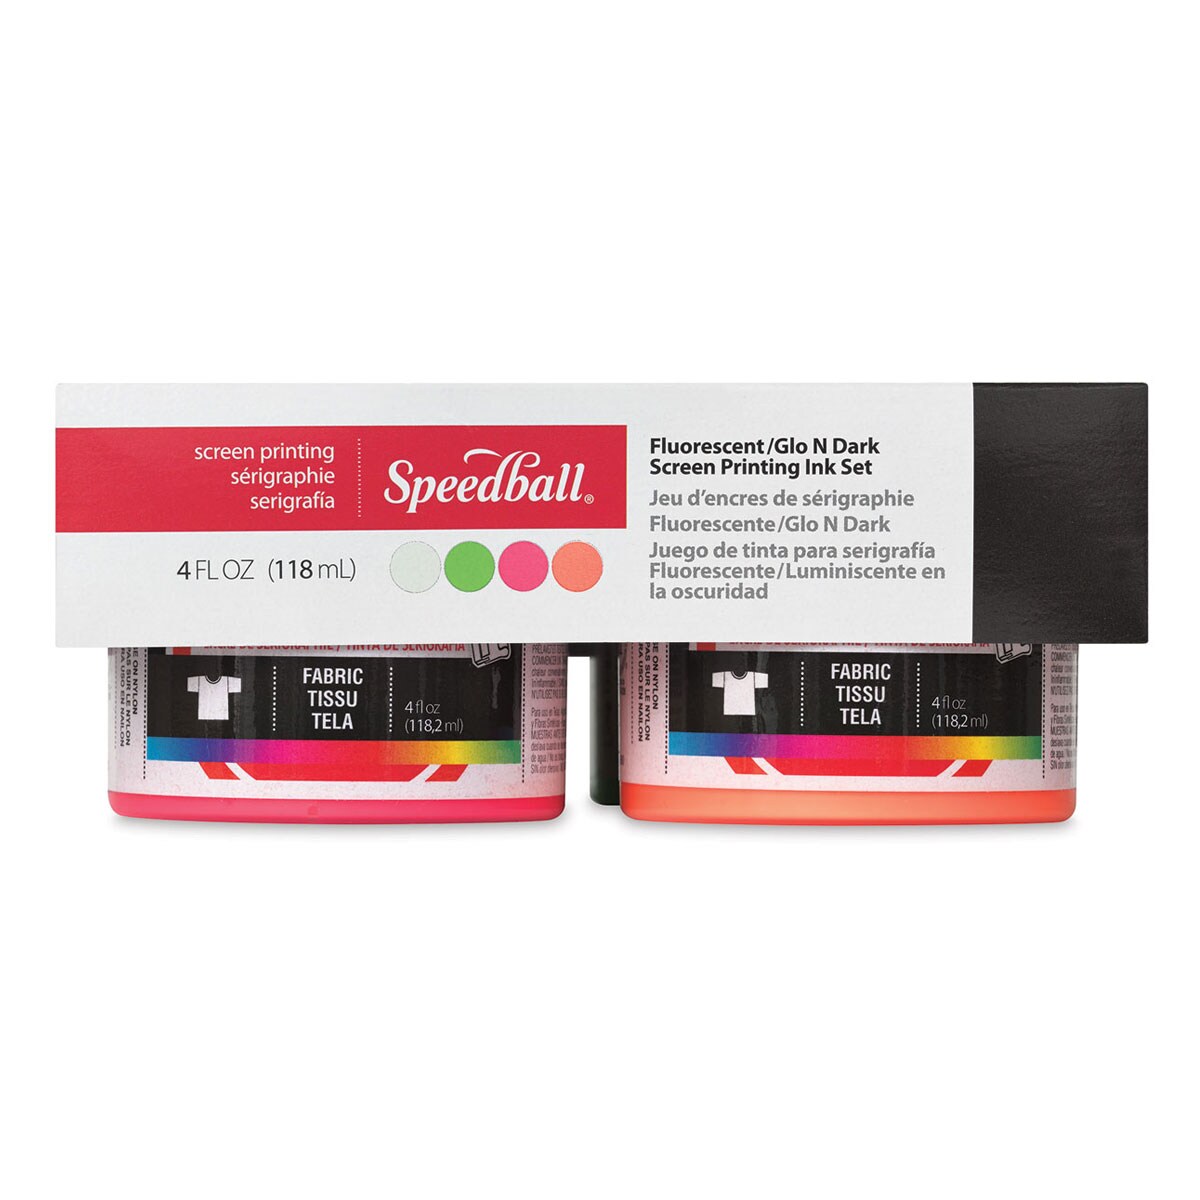 Fluorescent Speedball Screen Printing Ink - 4 Piece Set